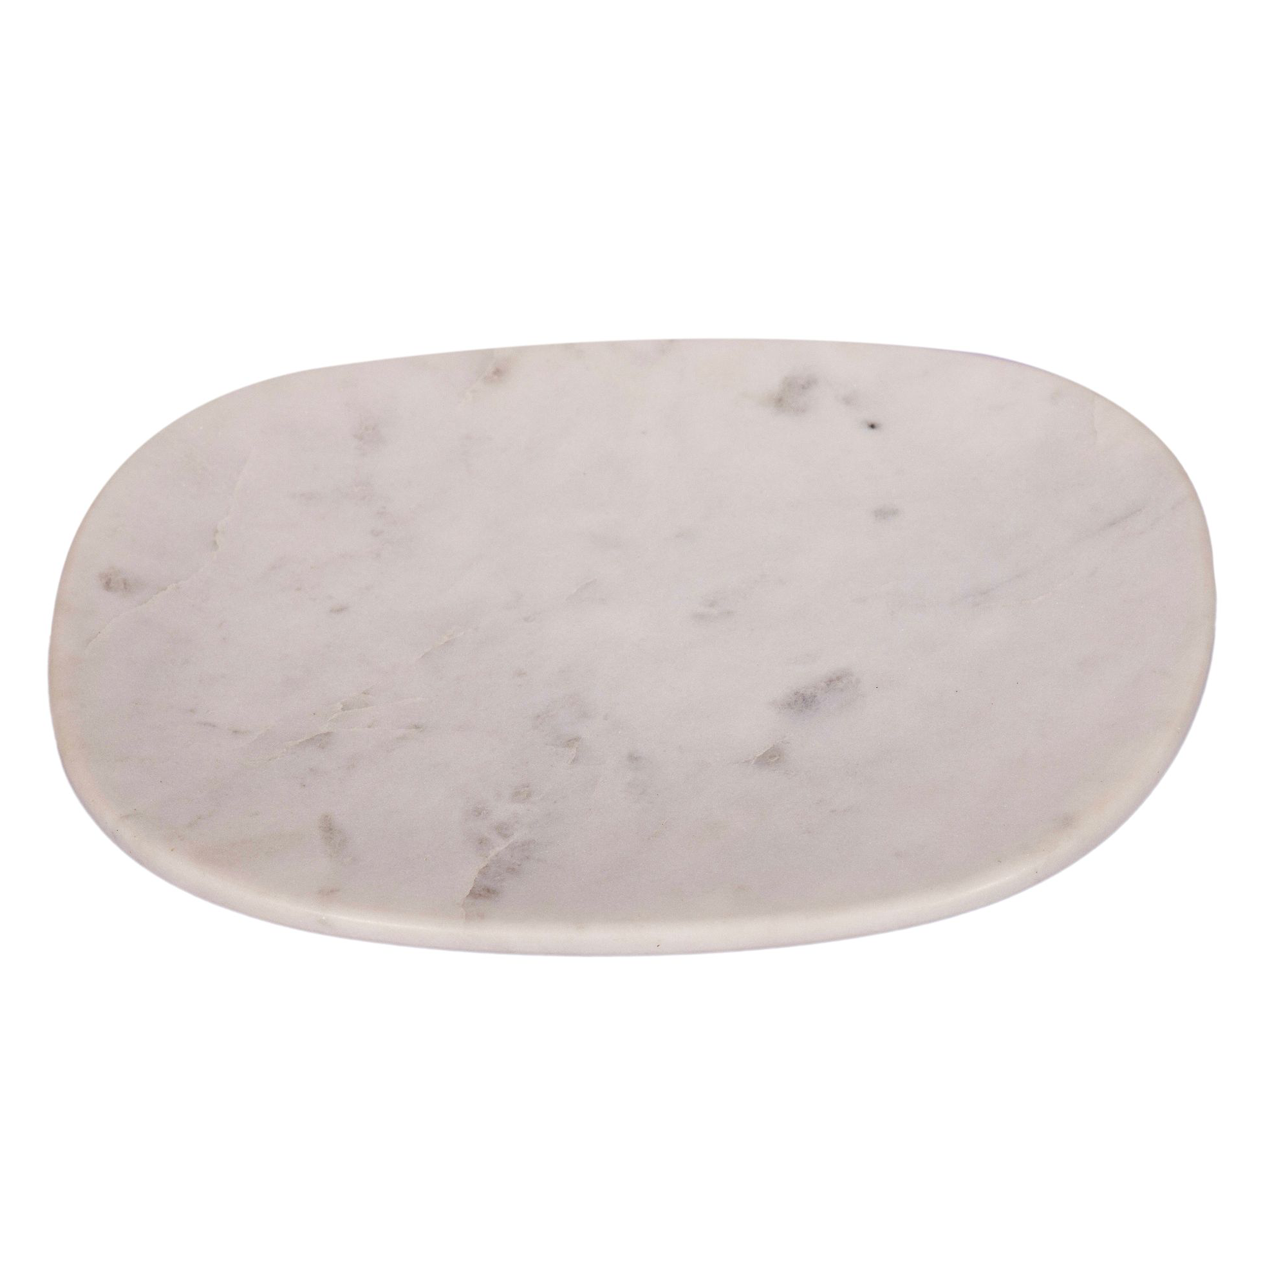 Reva platter handcrafted marble platter handmade in White marble & Bidasaar Brown Marble Home object serving dinnerware dinning